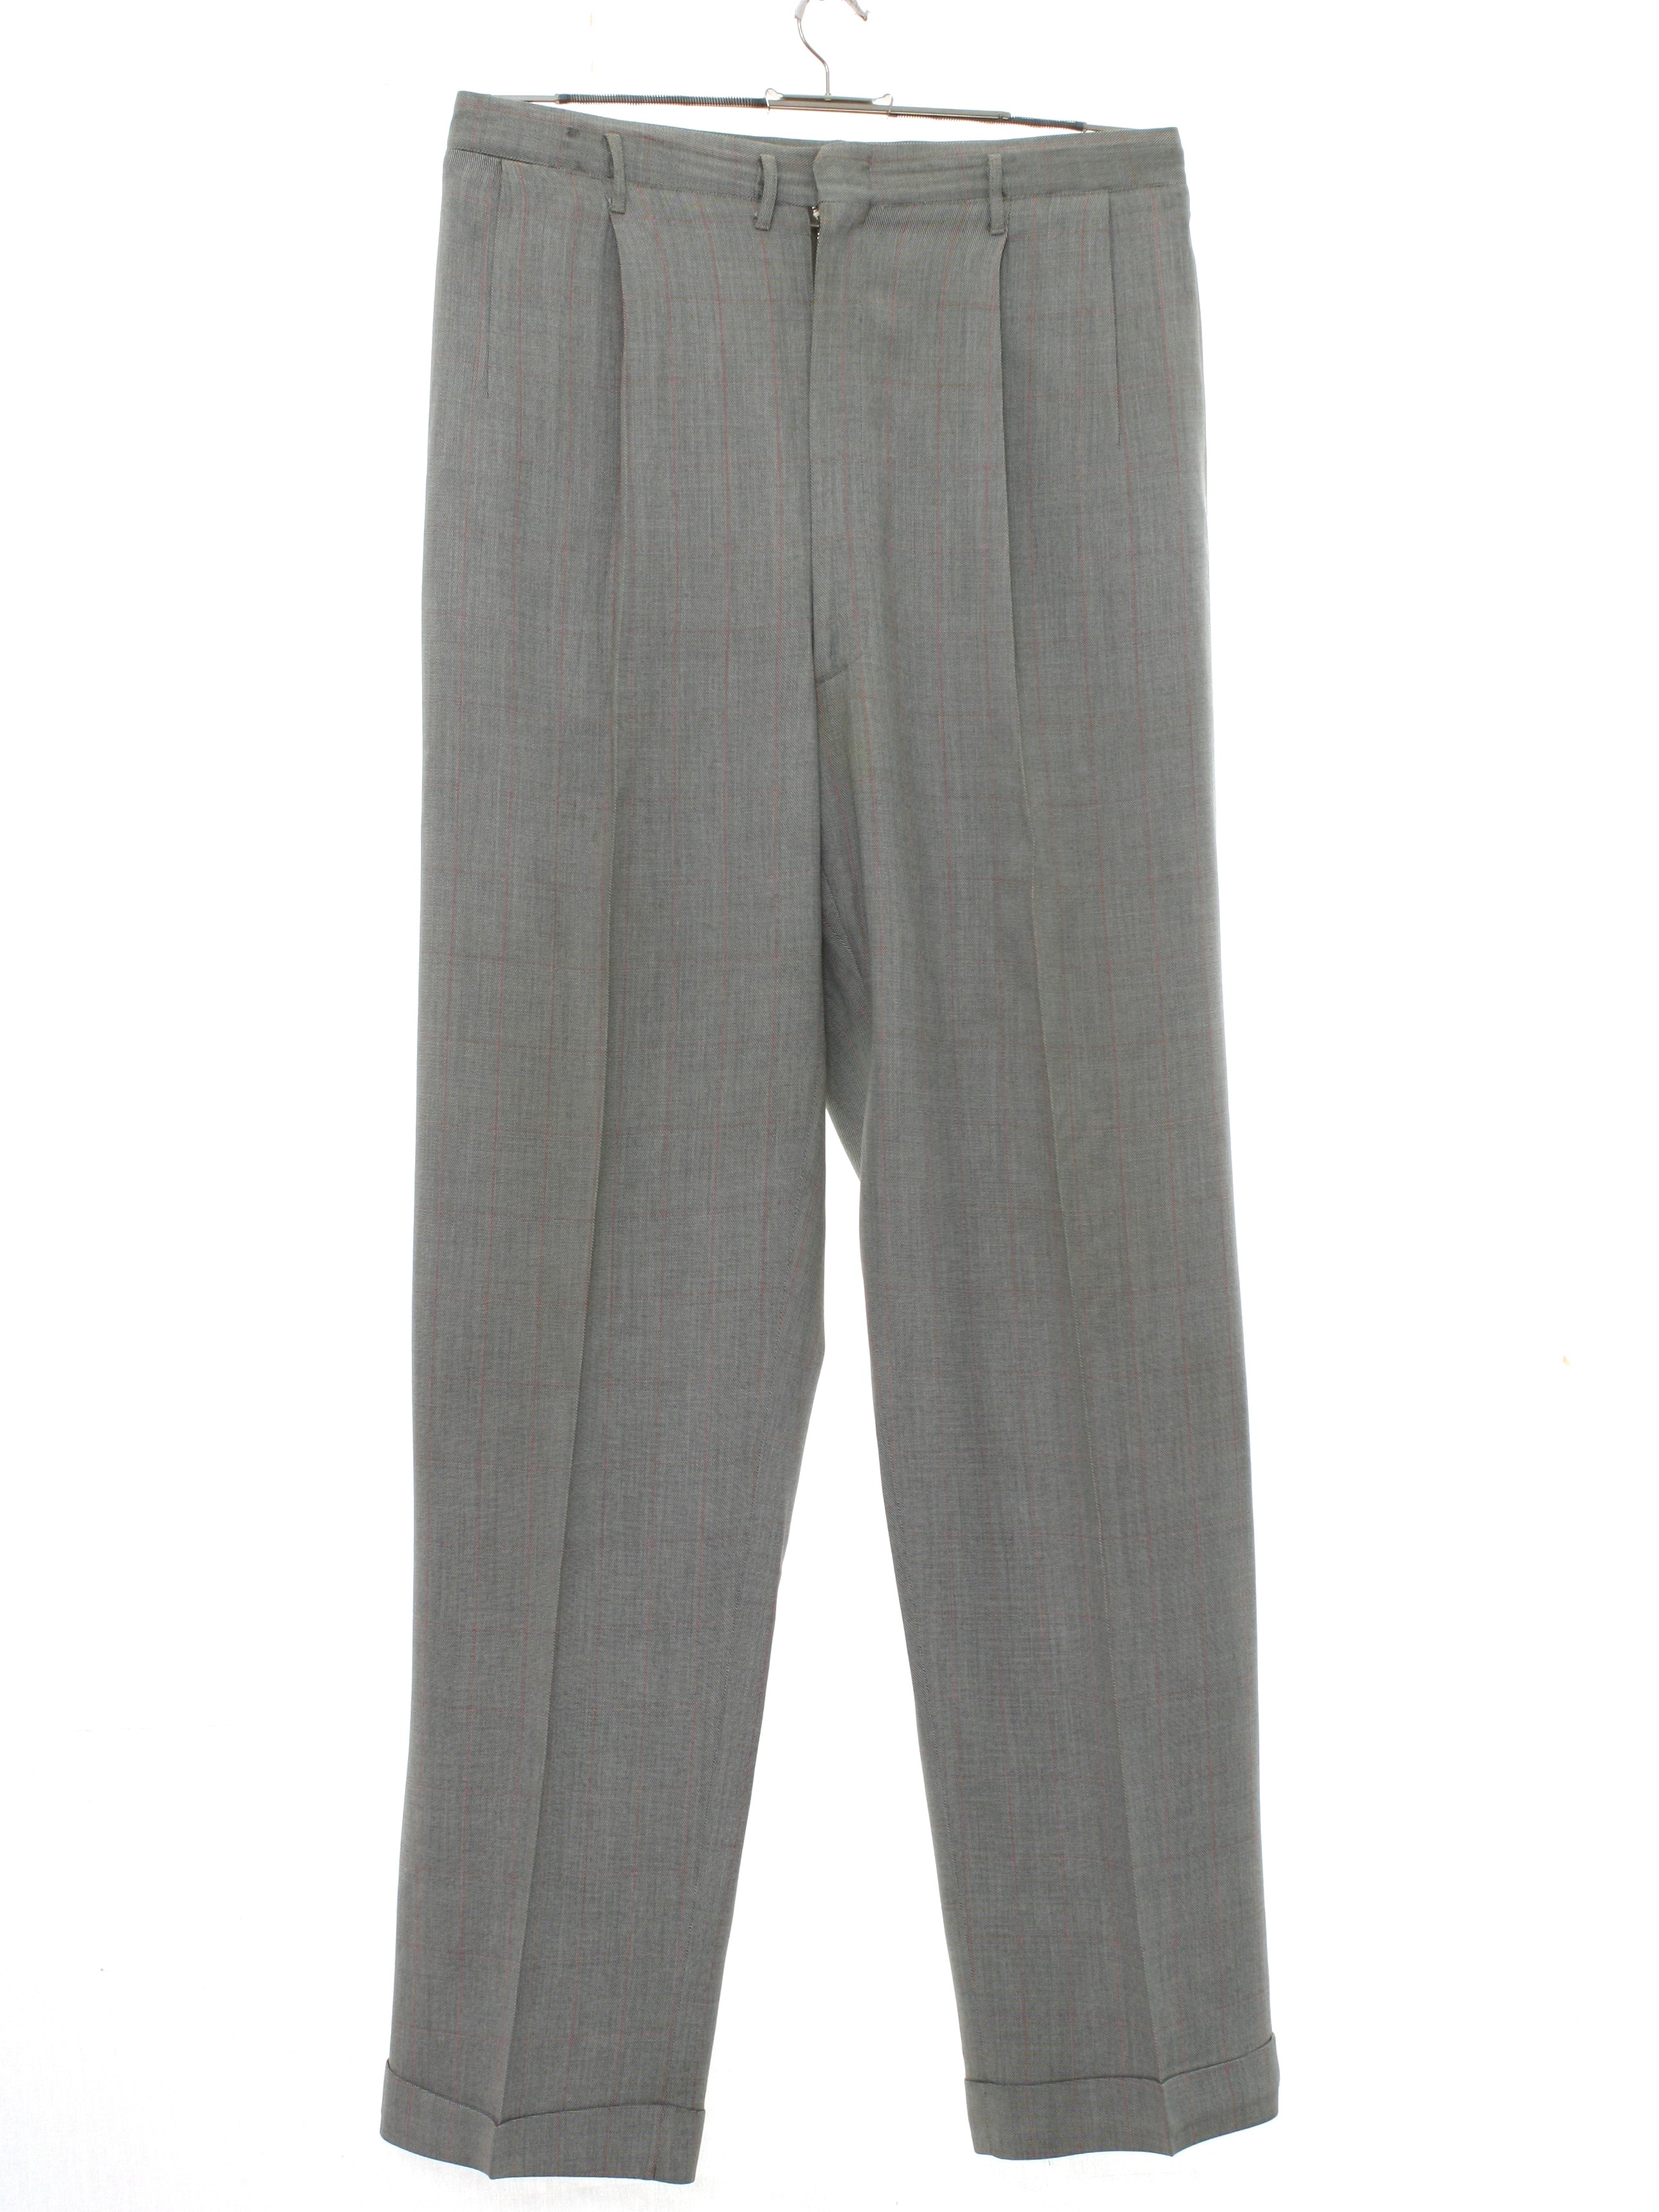 Retro 1940's Pants: Late 40s -No Label- Mens beige background, gray ...